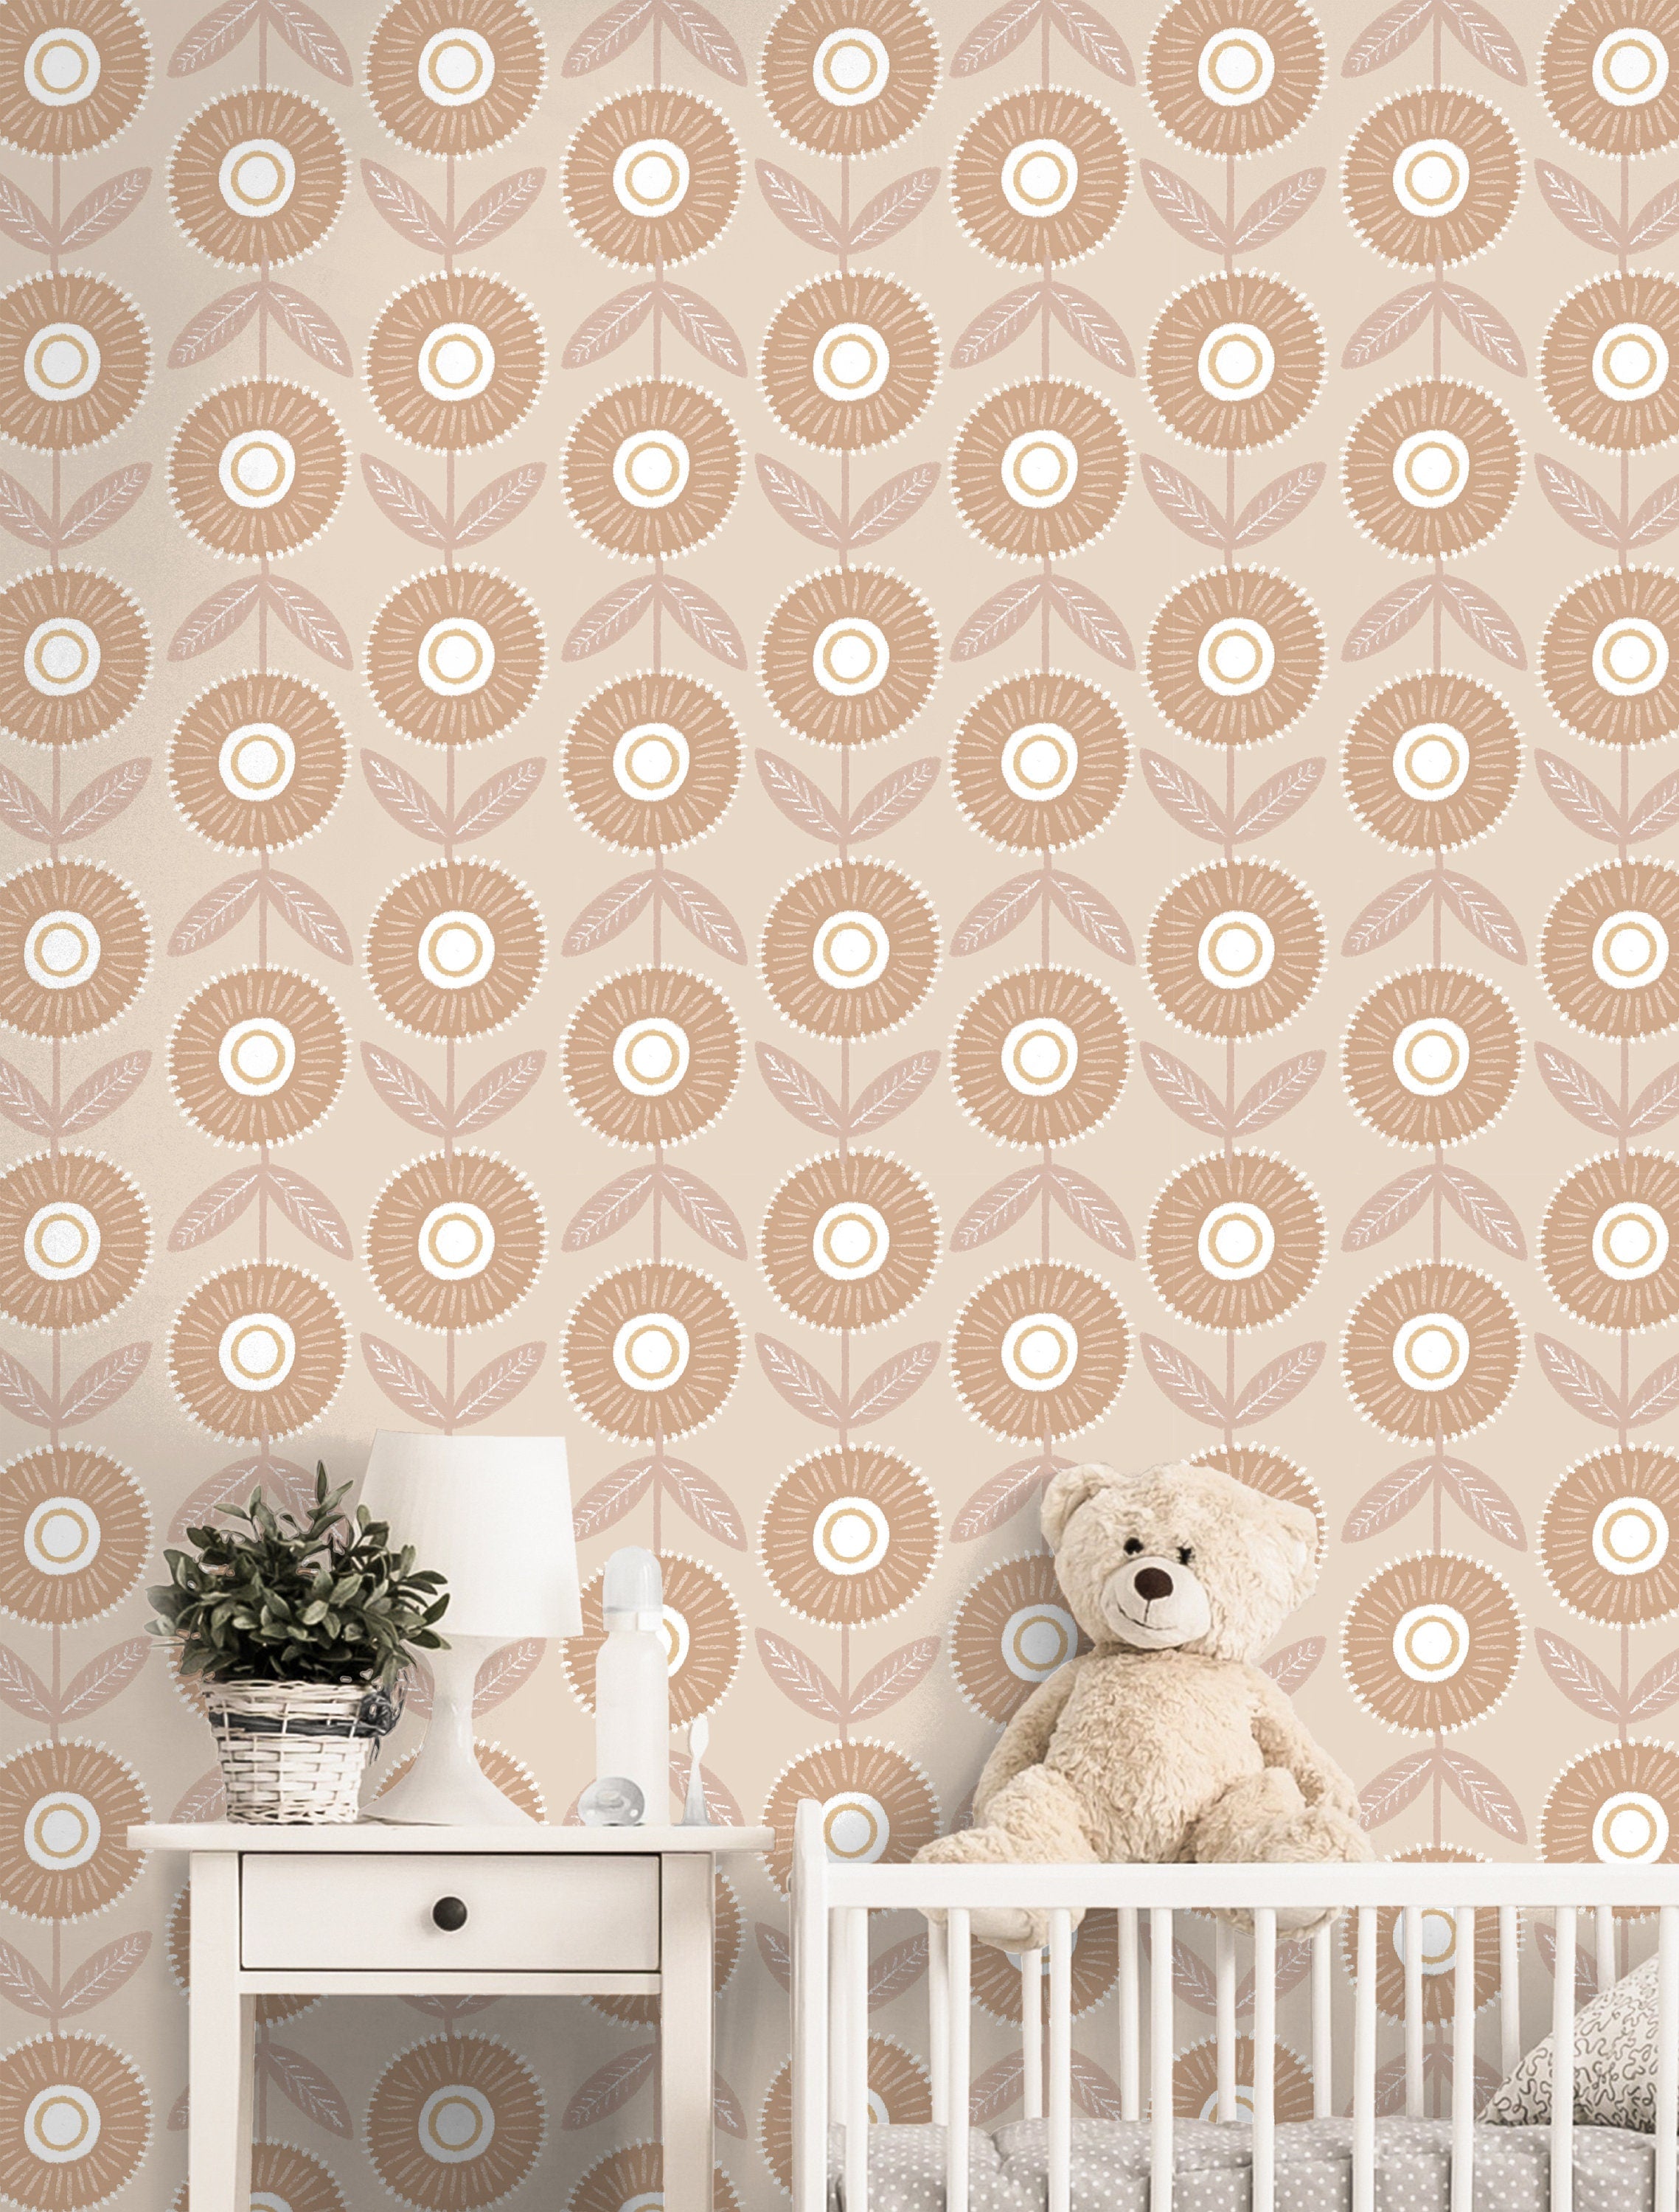 Farmhouse Floral Wallpaper | Removable Wallpaper | Peel And Stick Wallpaper | Adhesive Wallpaper | Wall Paper Peel Stick Wall Mural 3608 - JamesAndColors